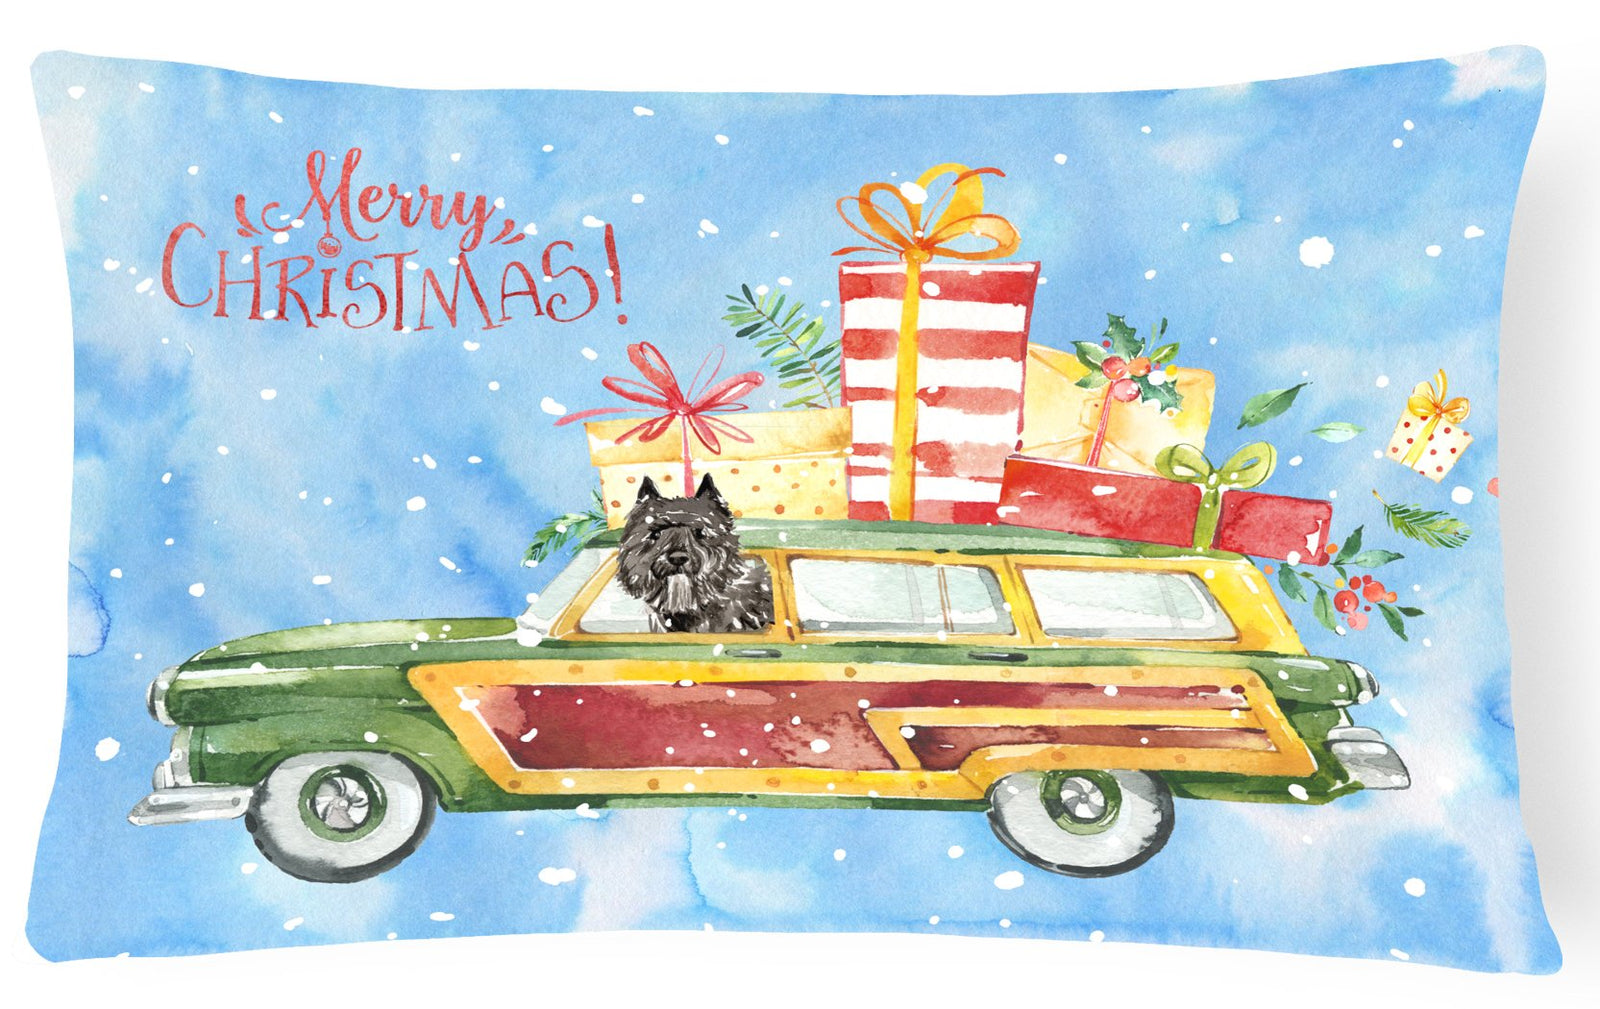 Merry Christmas Bouvier des Flandres Canvas Fabric Decorative Pillow CK2398PW1216 by Caroline's Treasures